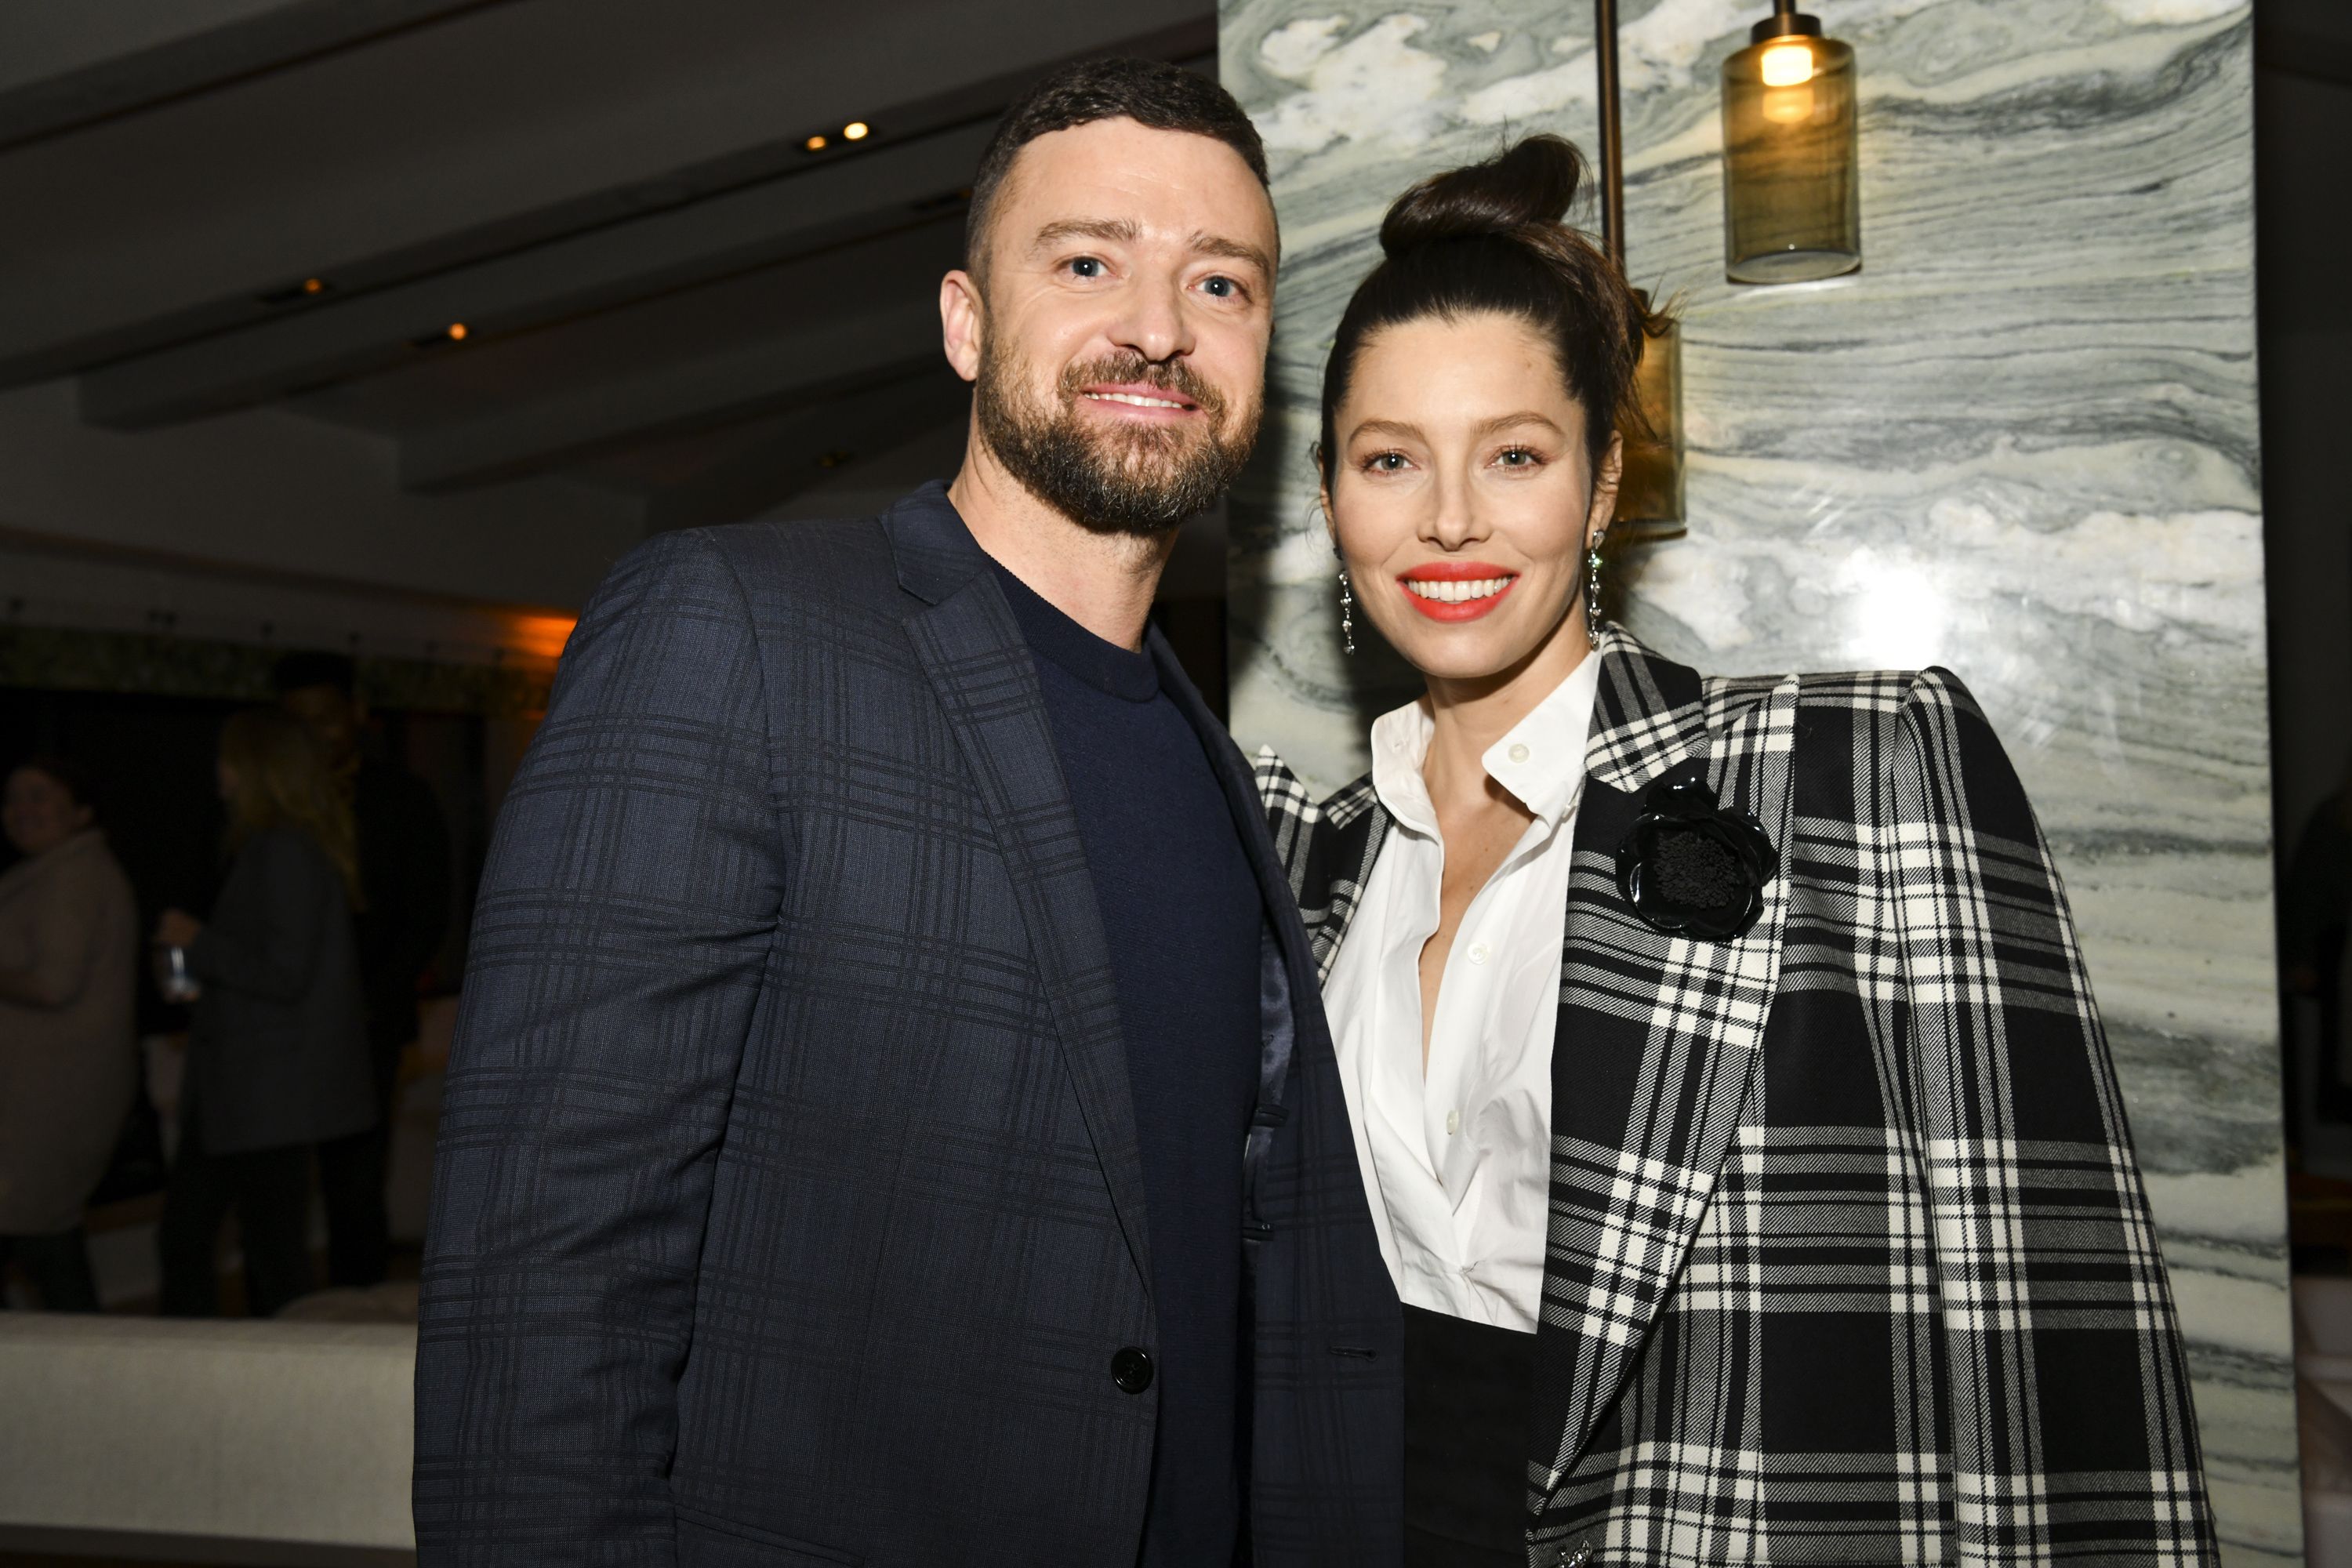 Justin Timberlake and Jessica Biel's Stylish Looks at Paris Fashion Week